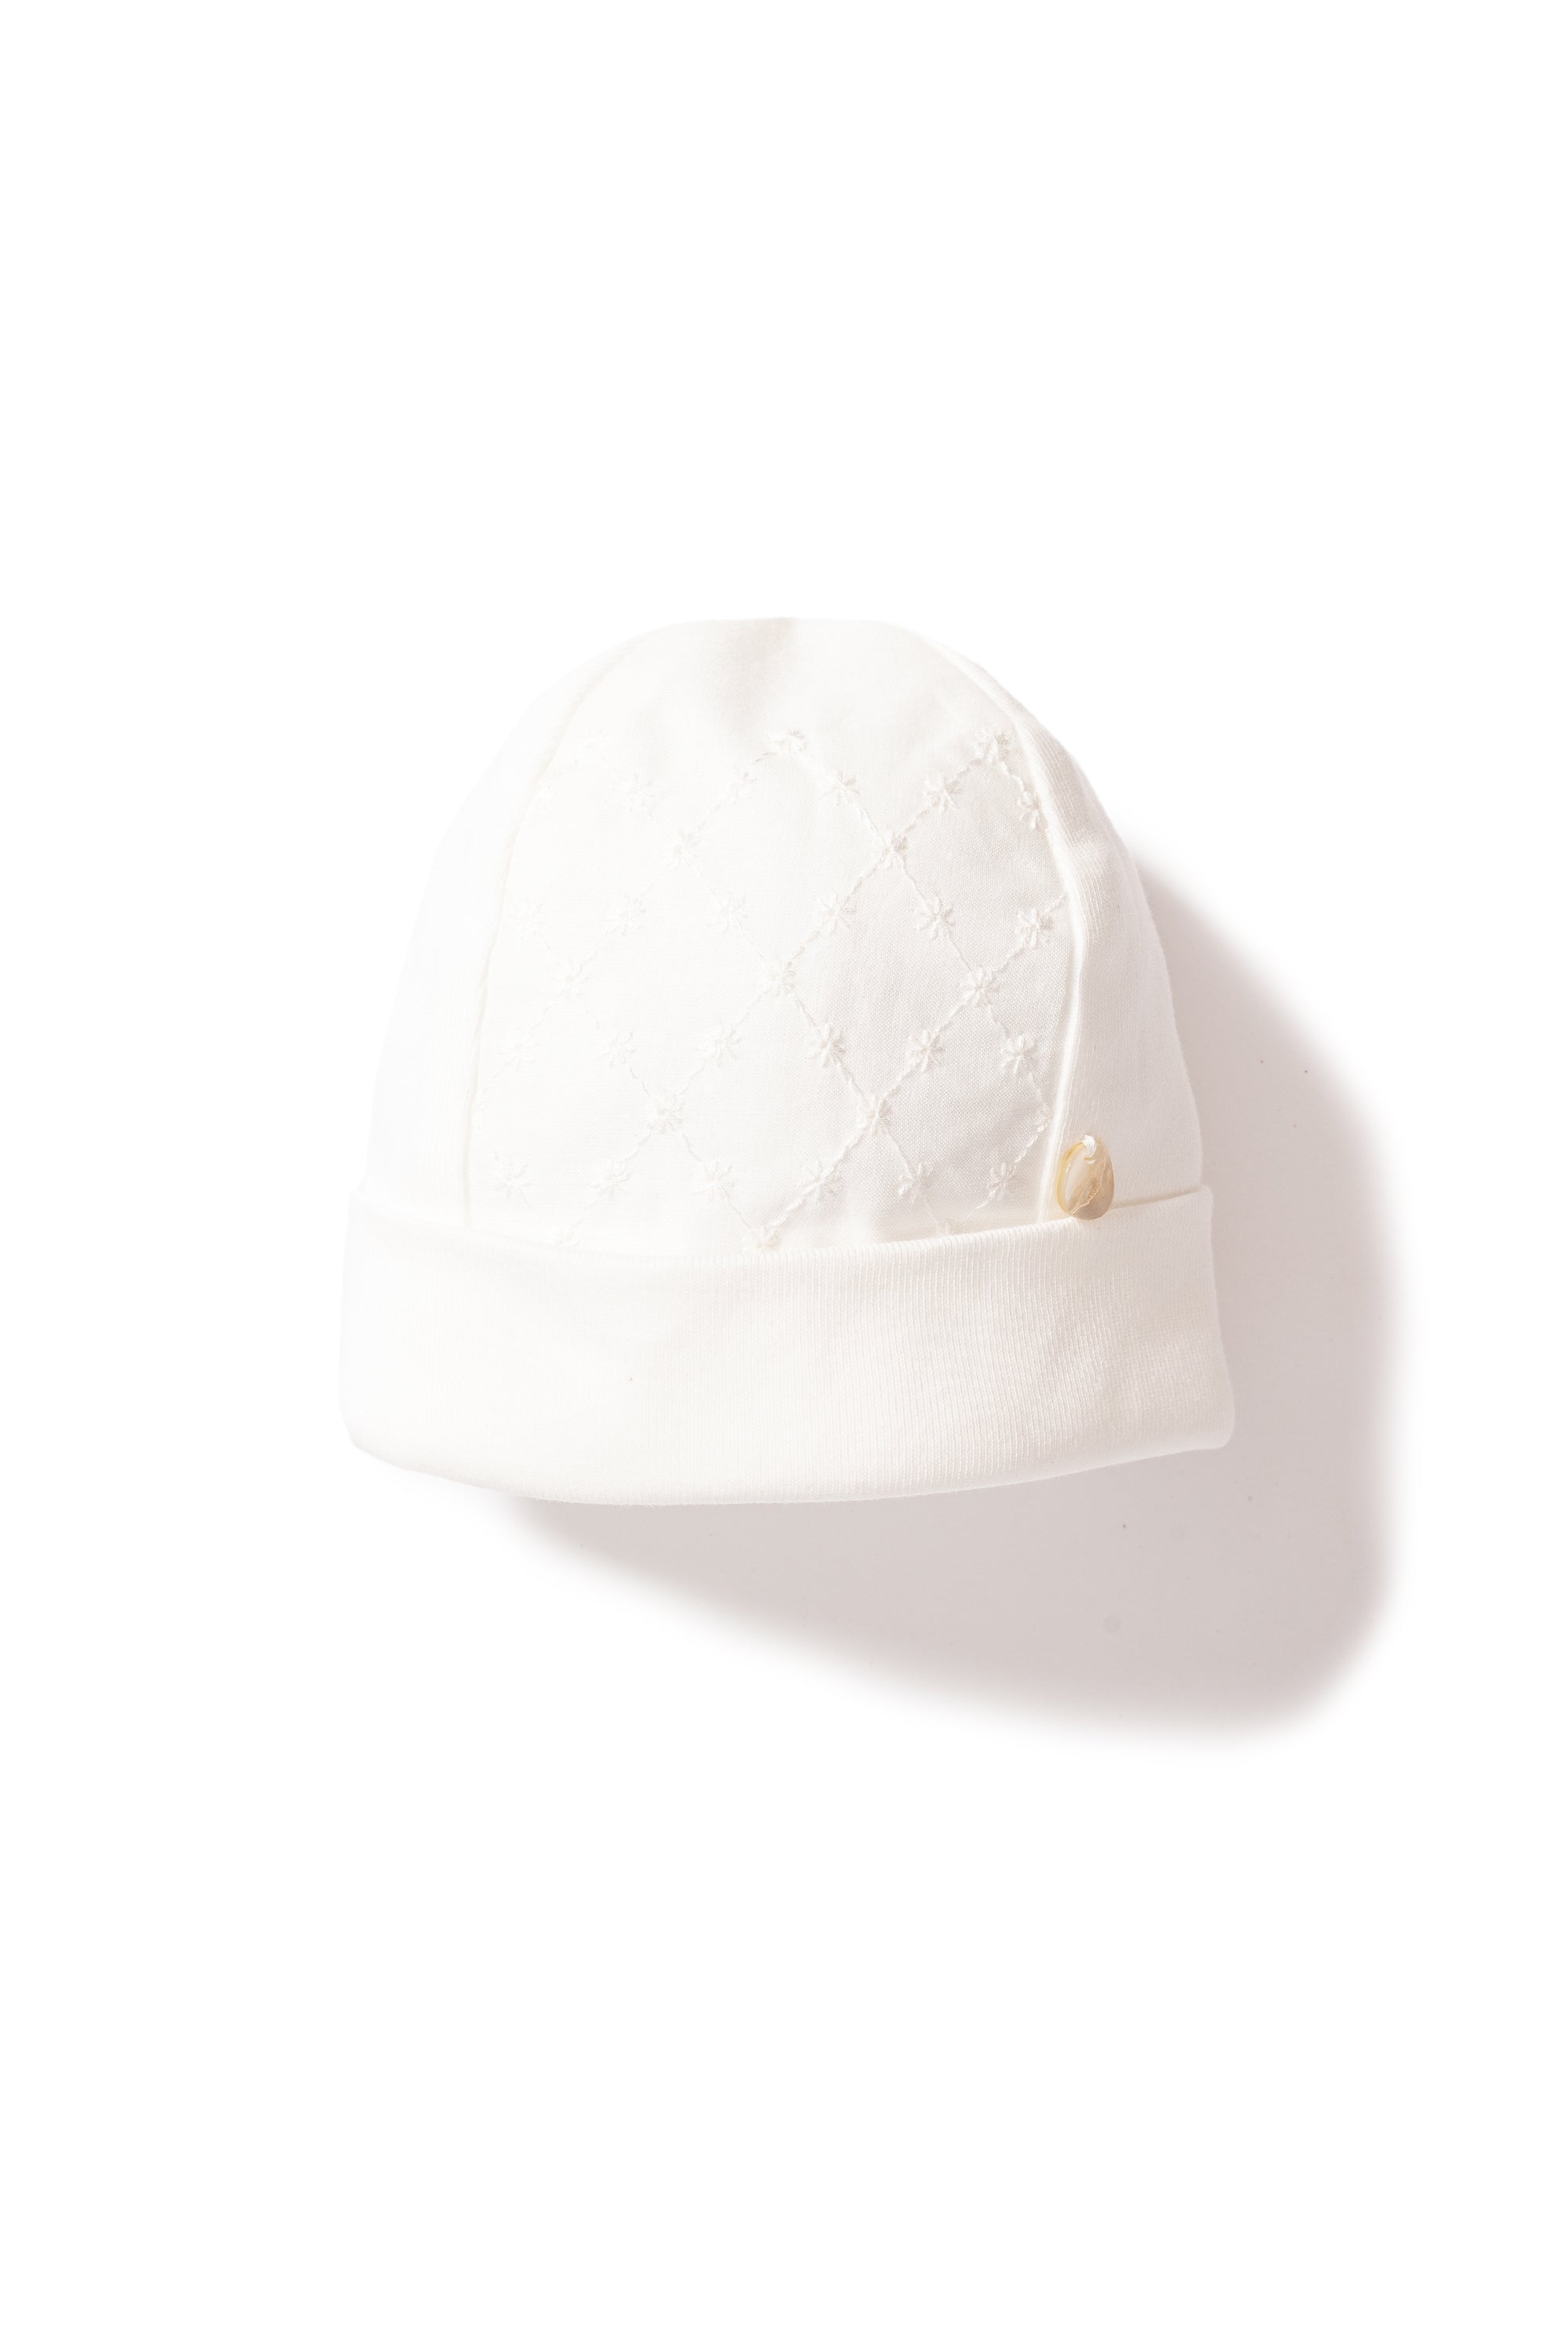 Babygrow & Matching Hat - White embroidery - Purete